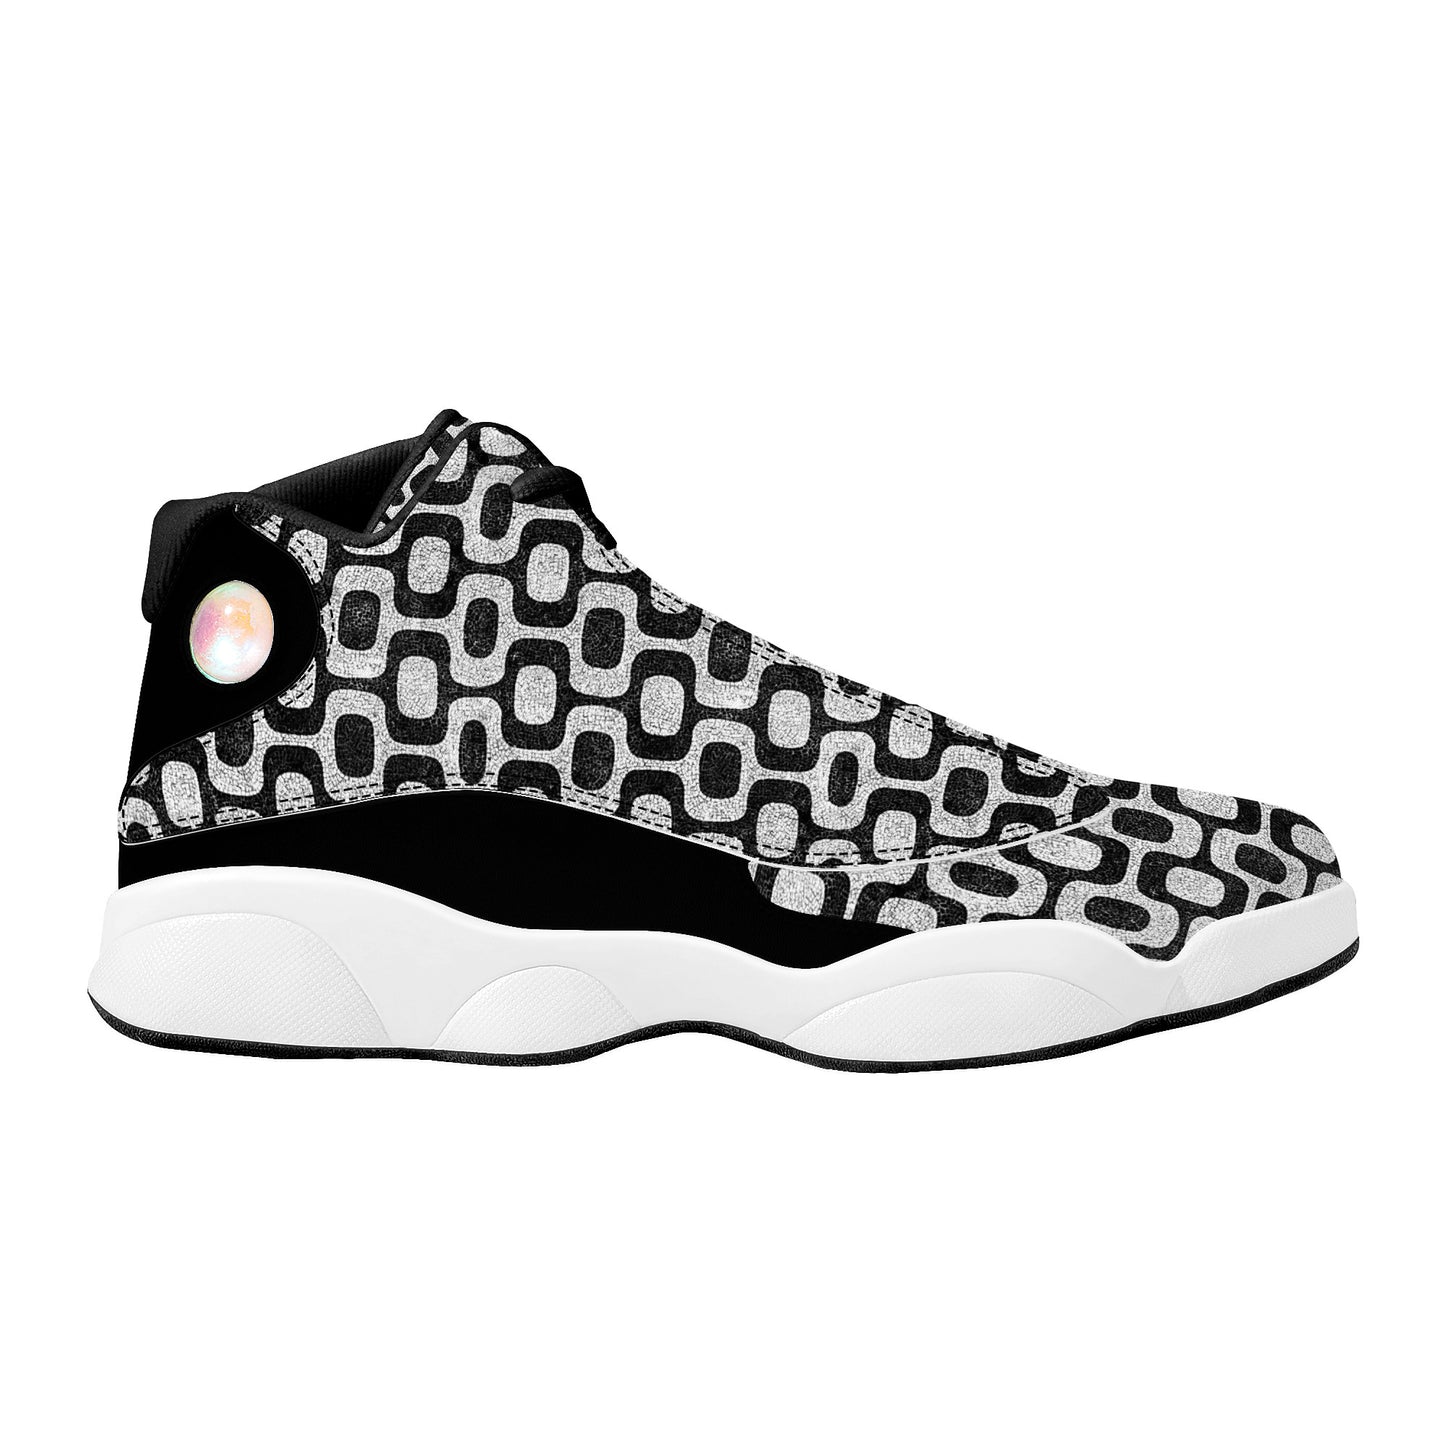 "Ipanema" Basketball Shoes